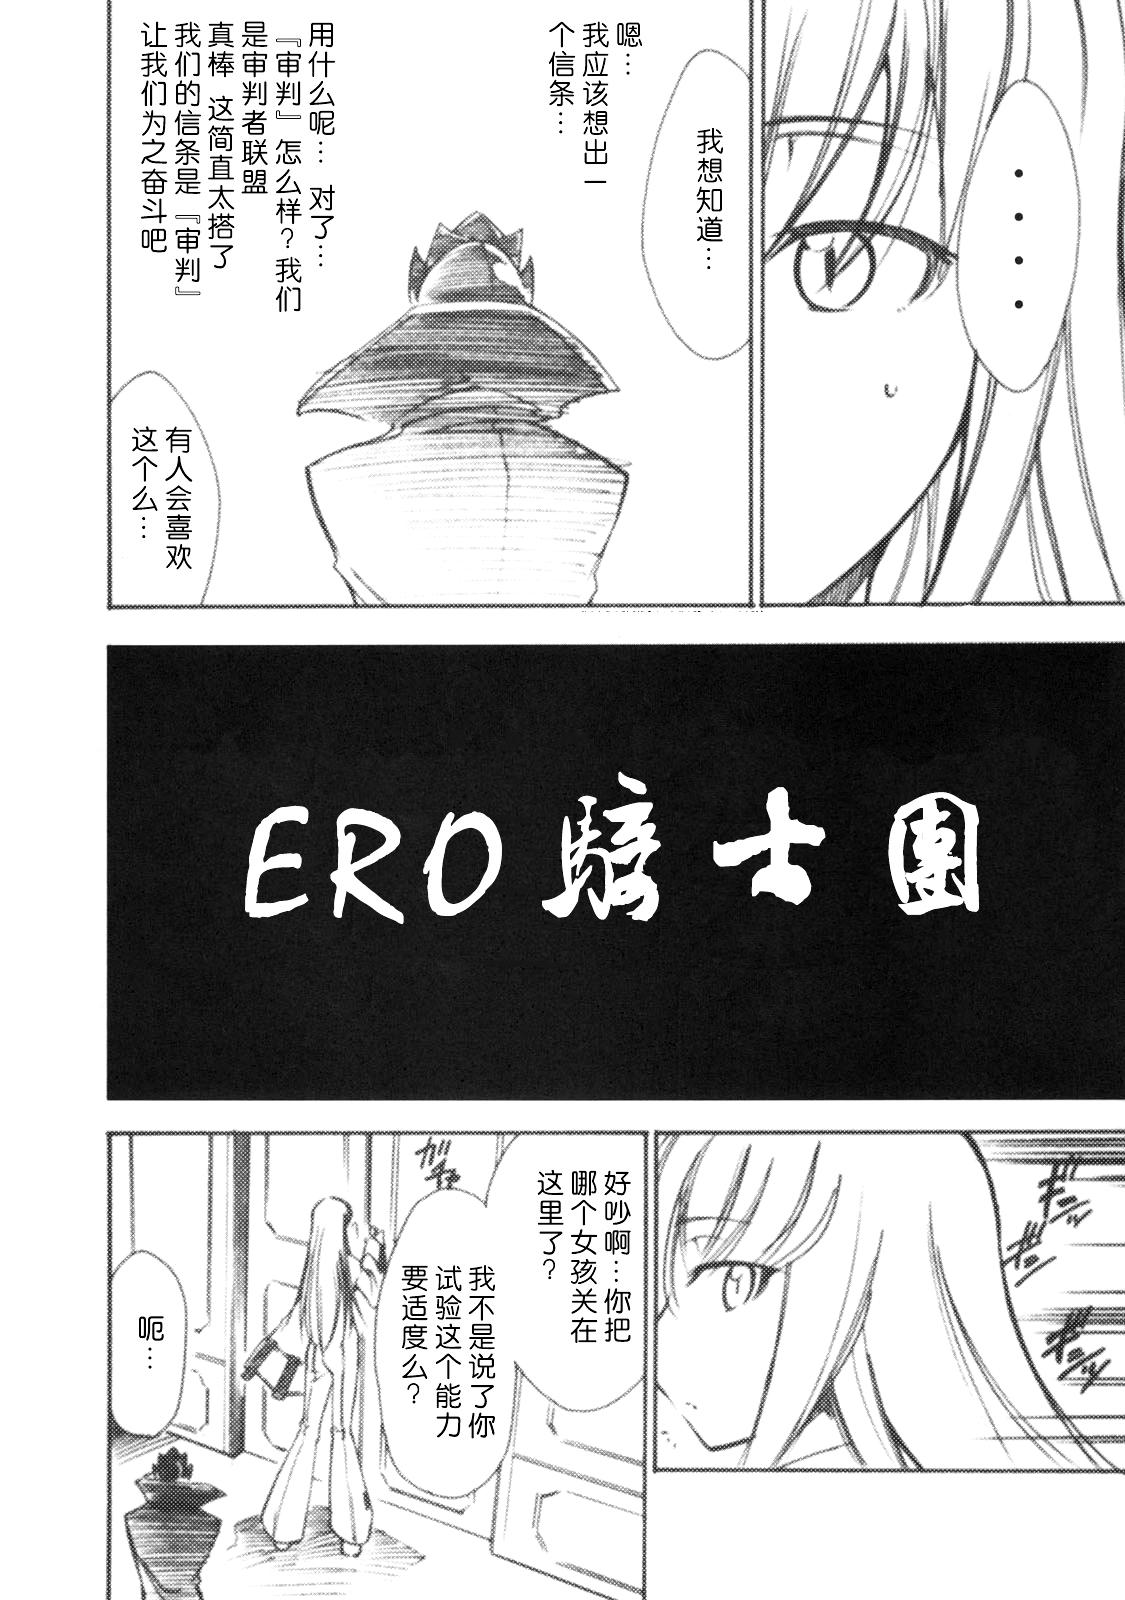 Code Eross 2: Ero no Kishidan 4